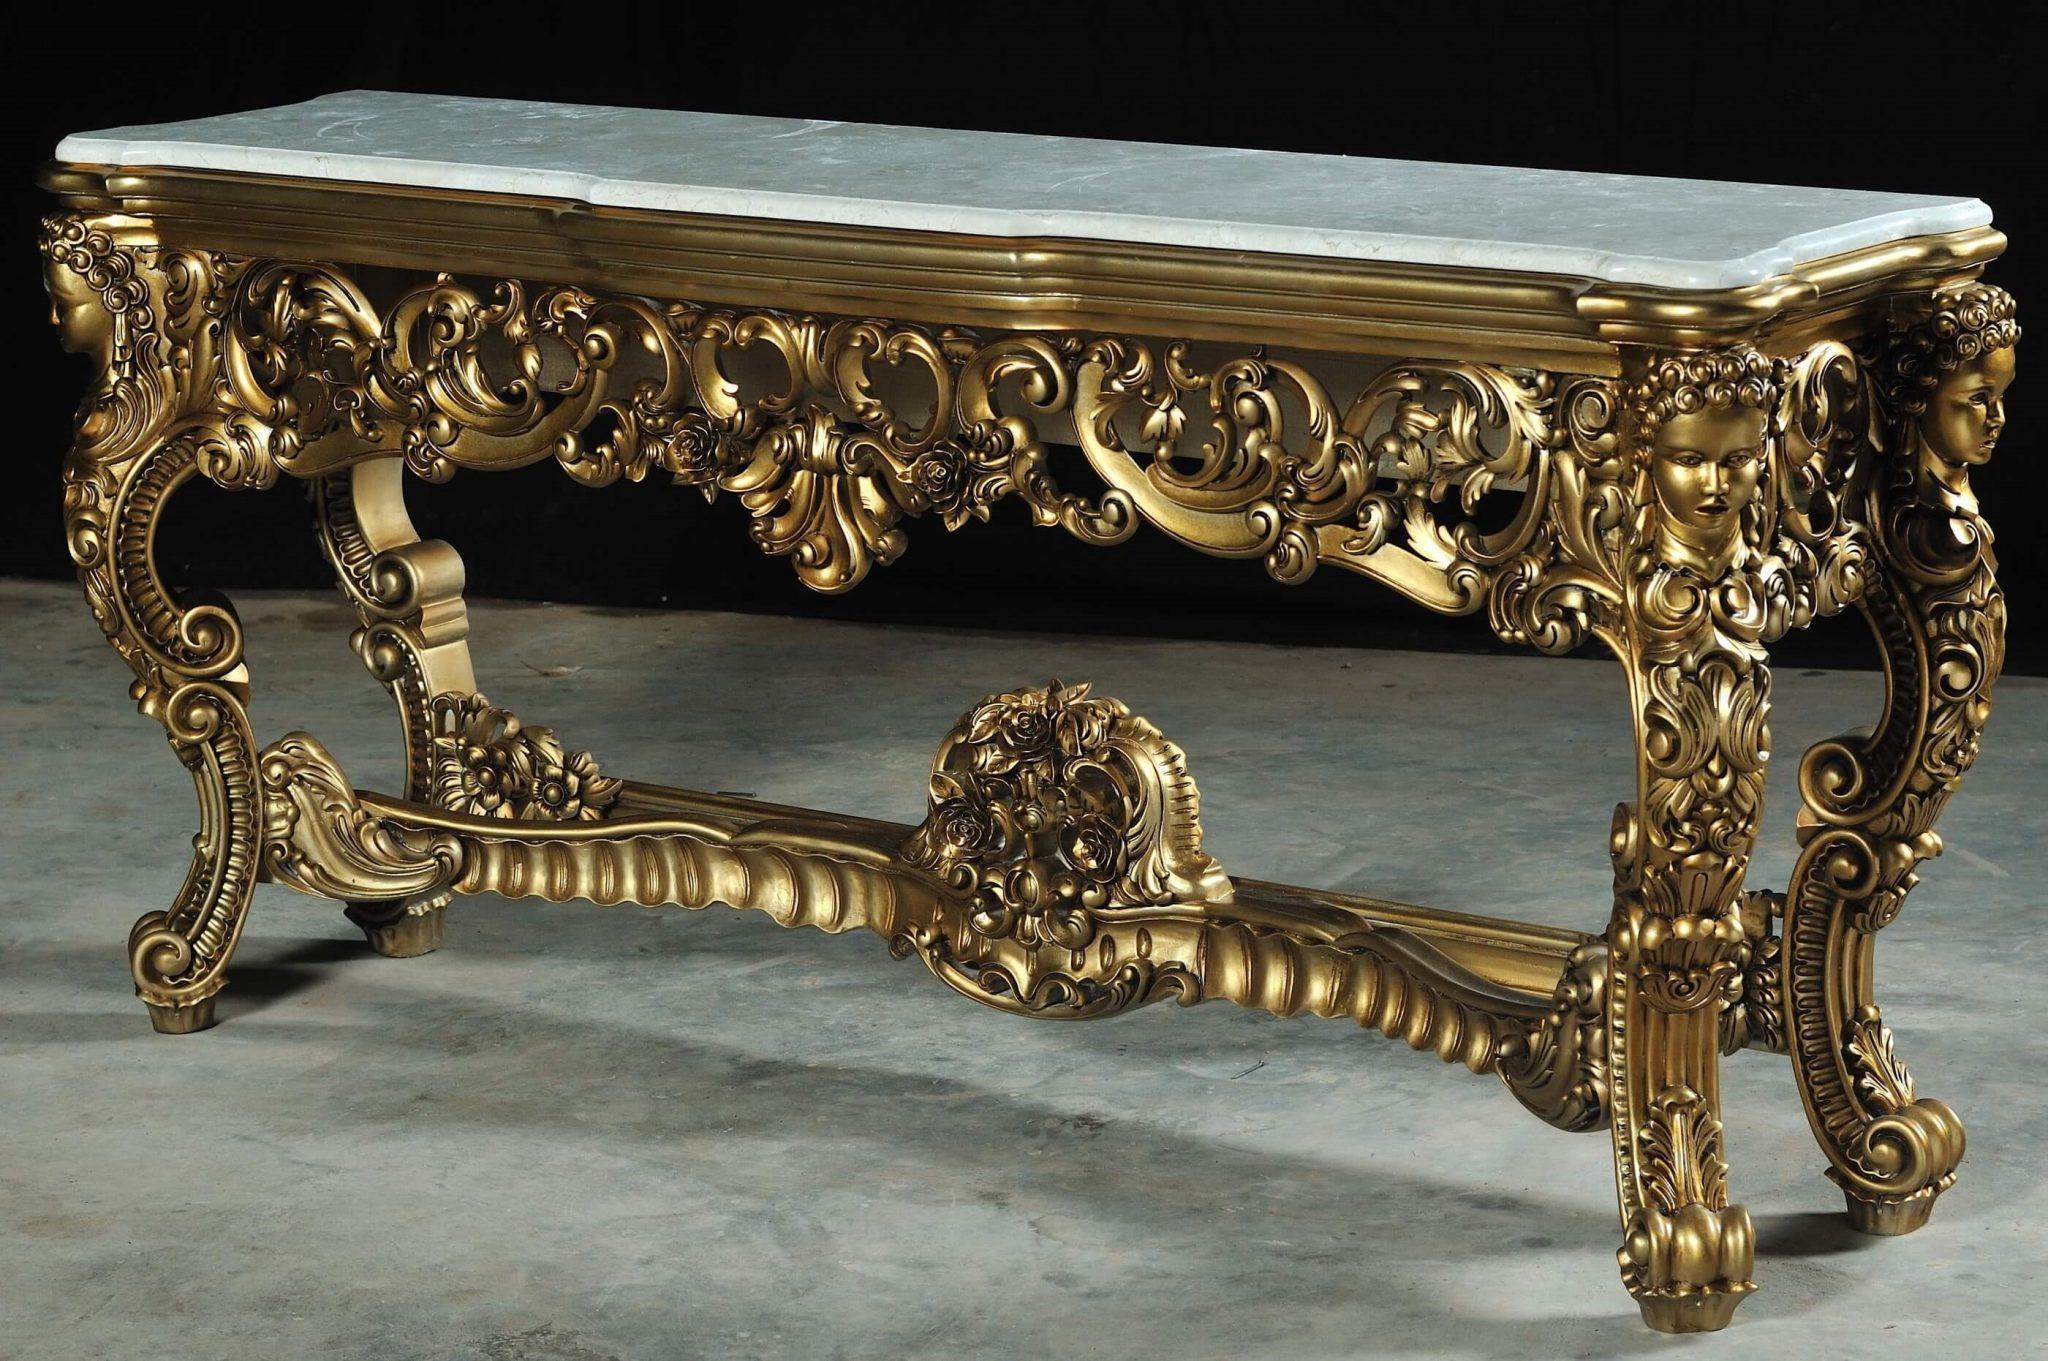 

    
Luxury Golden Bronze Wood Trim Console Table AMBROGIO EUROPEAN FURNITURE Classic
